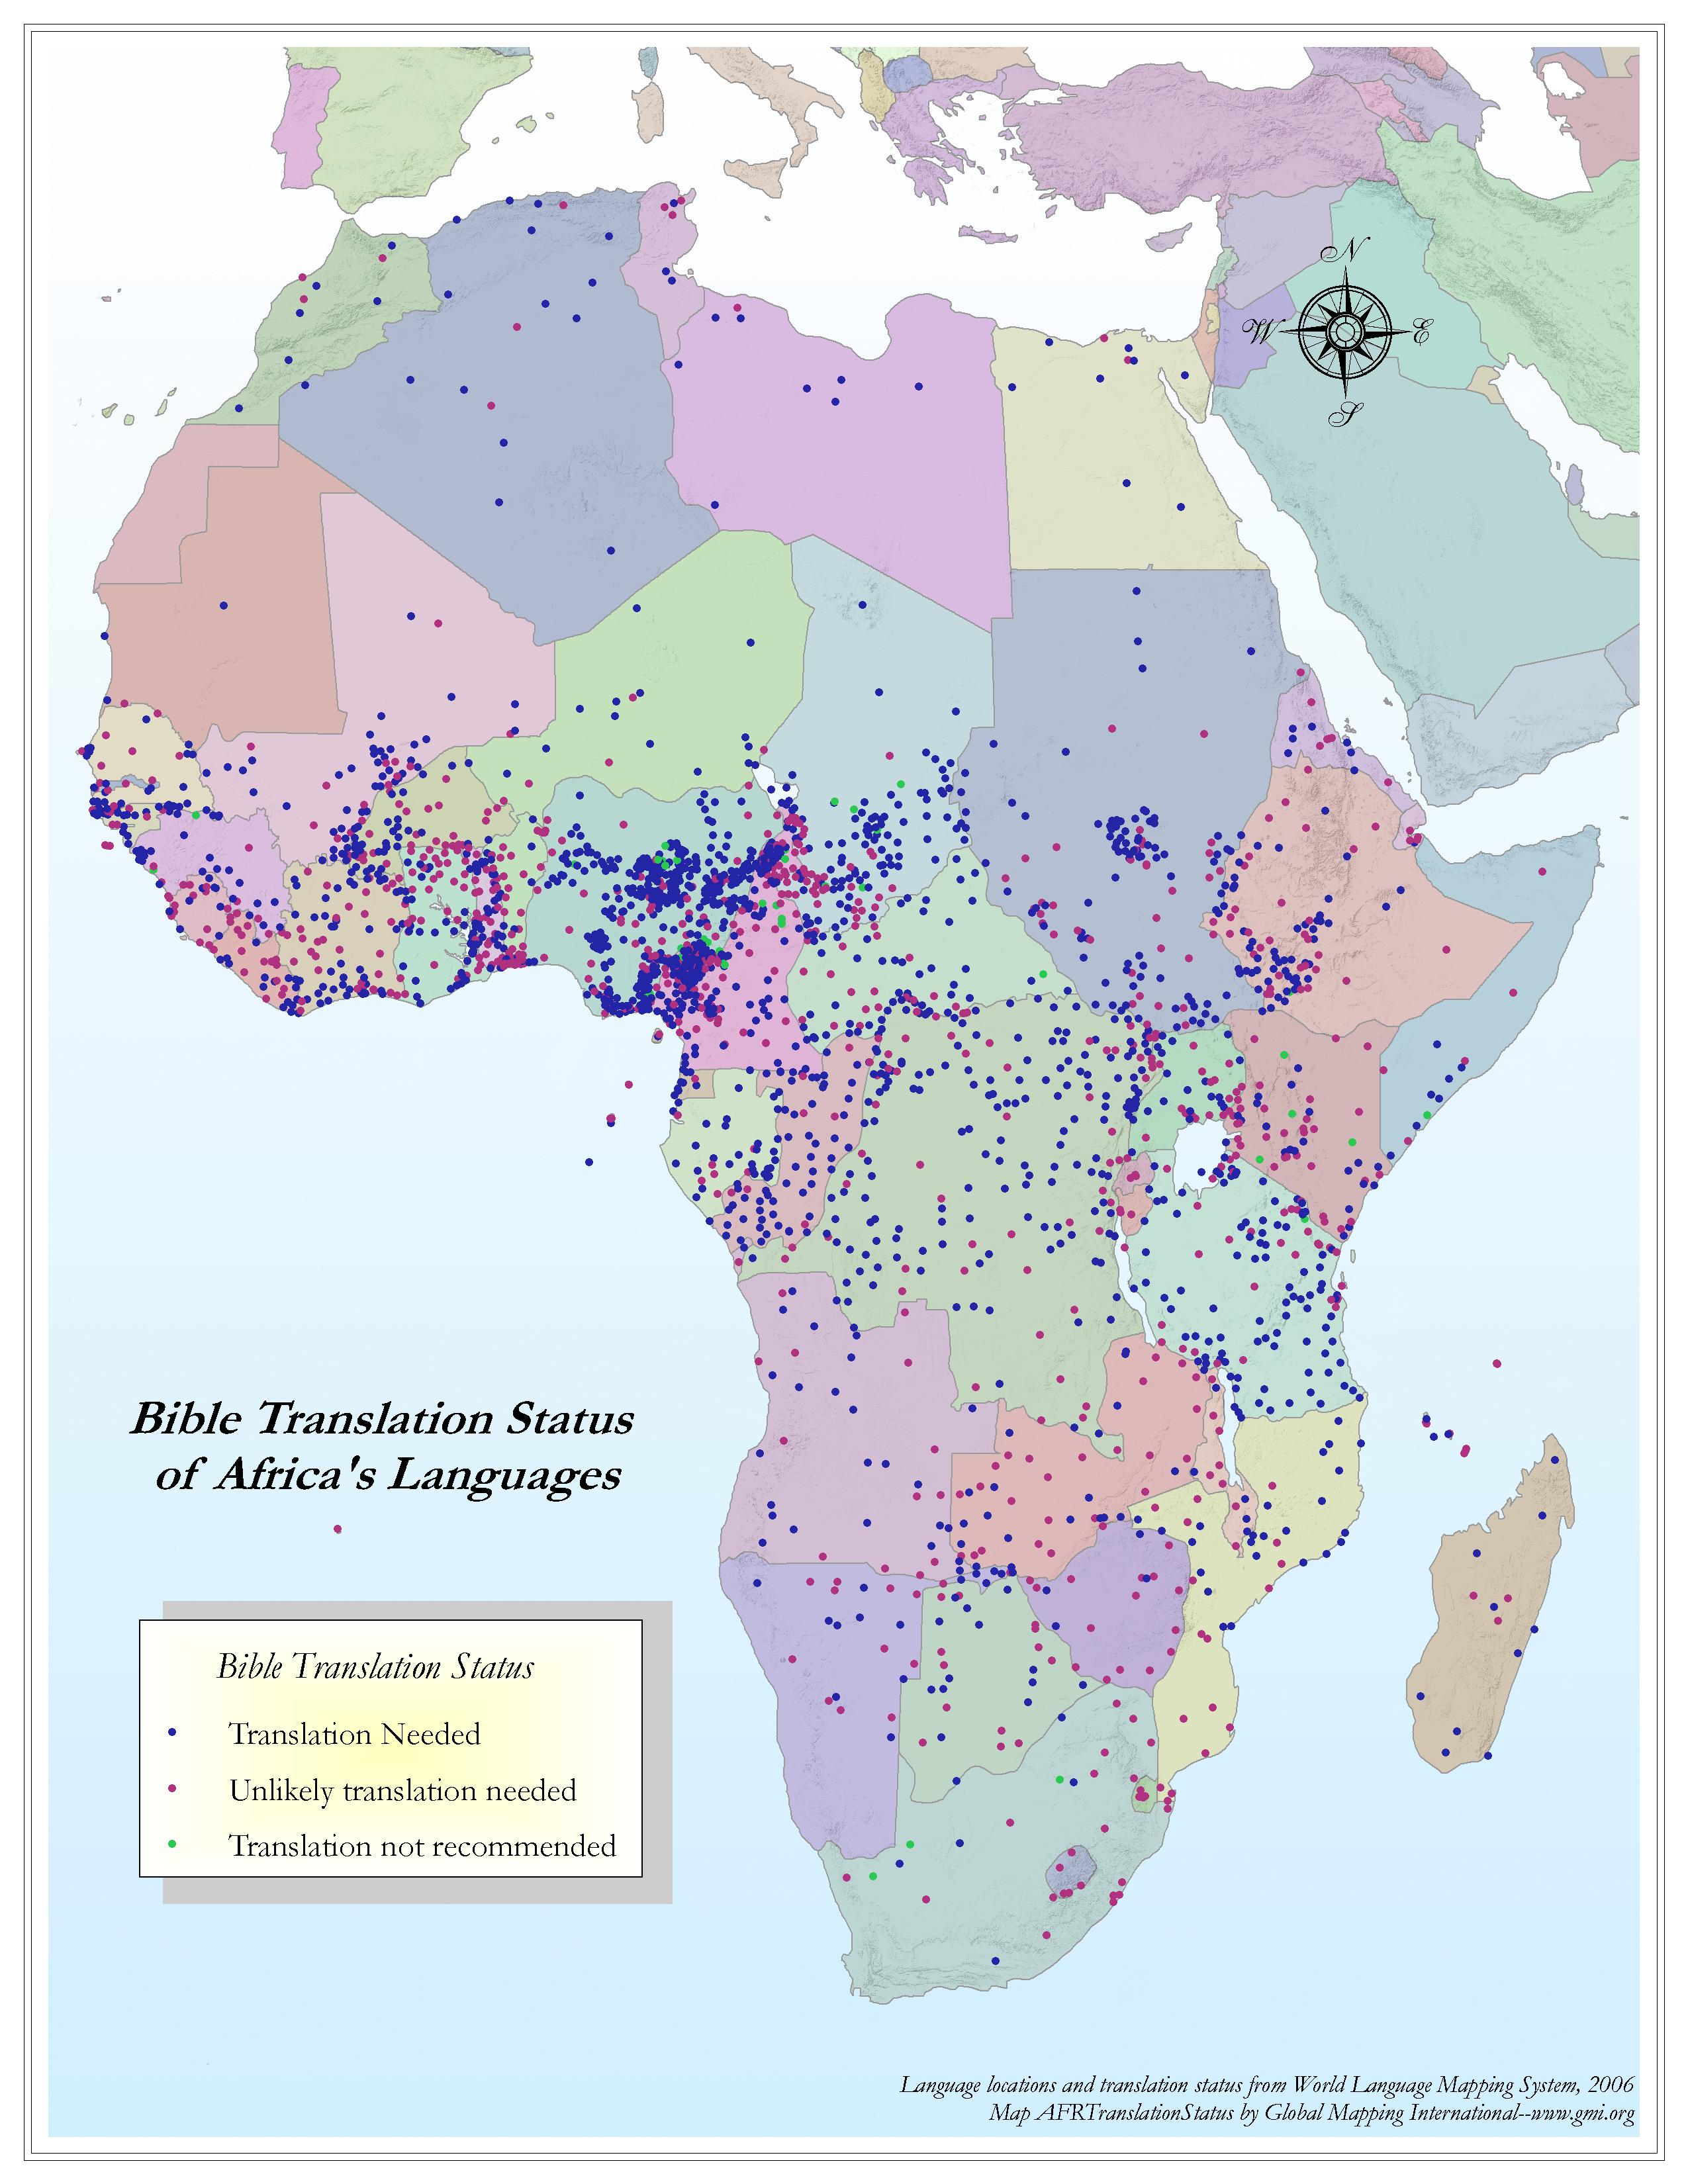 Bible Translation Status of Africa's Languages